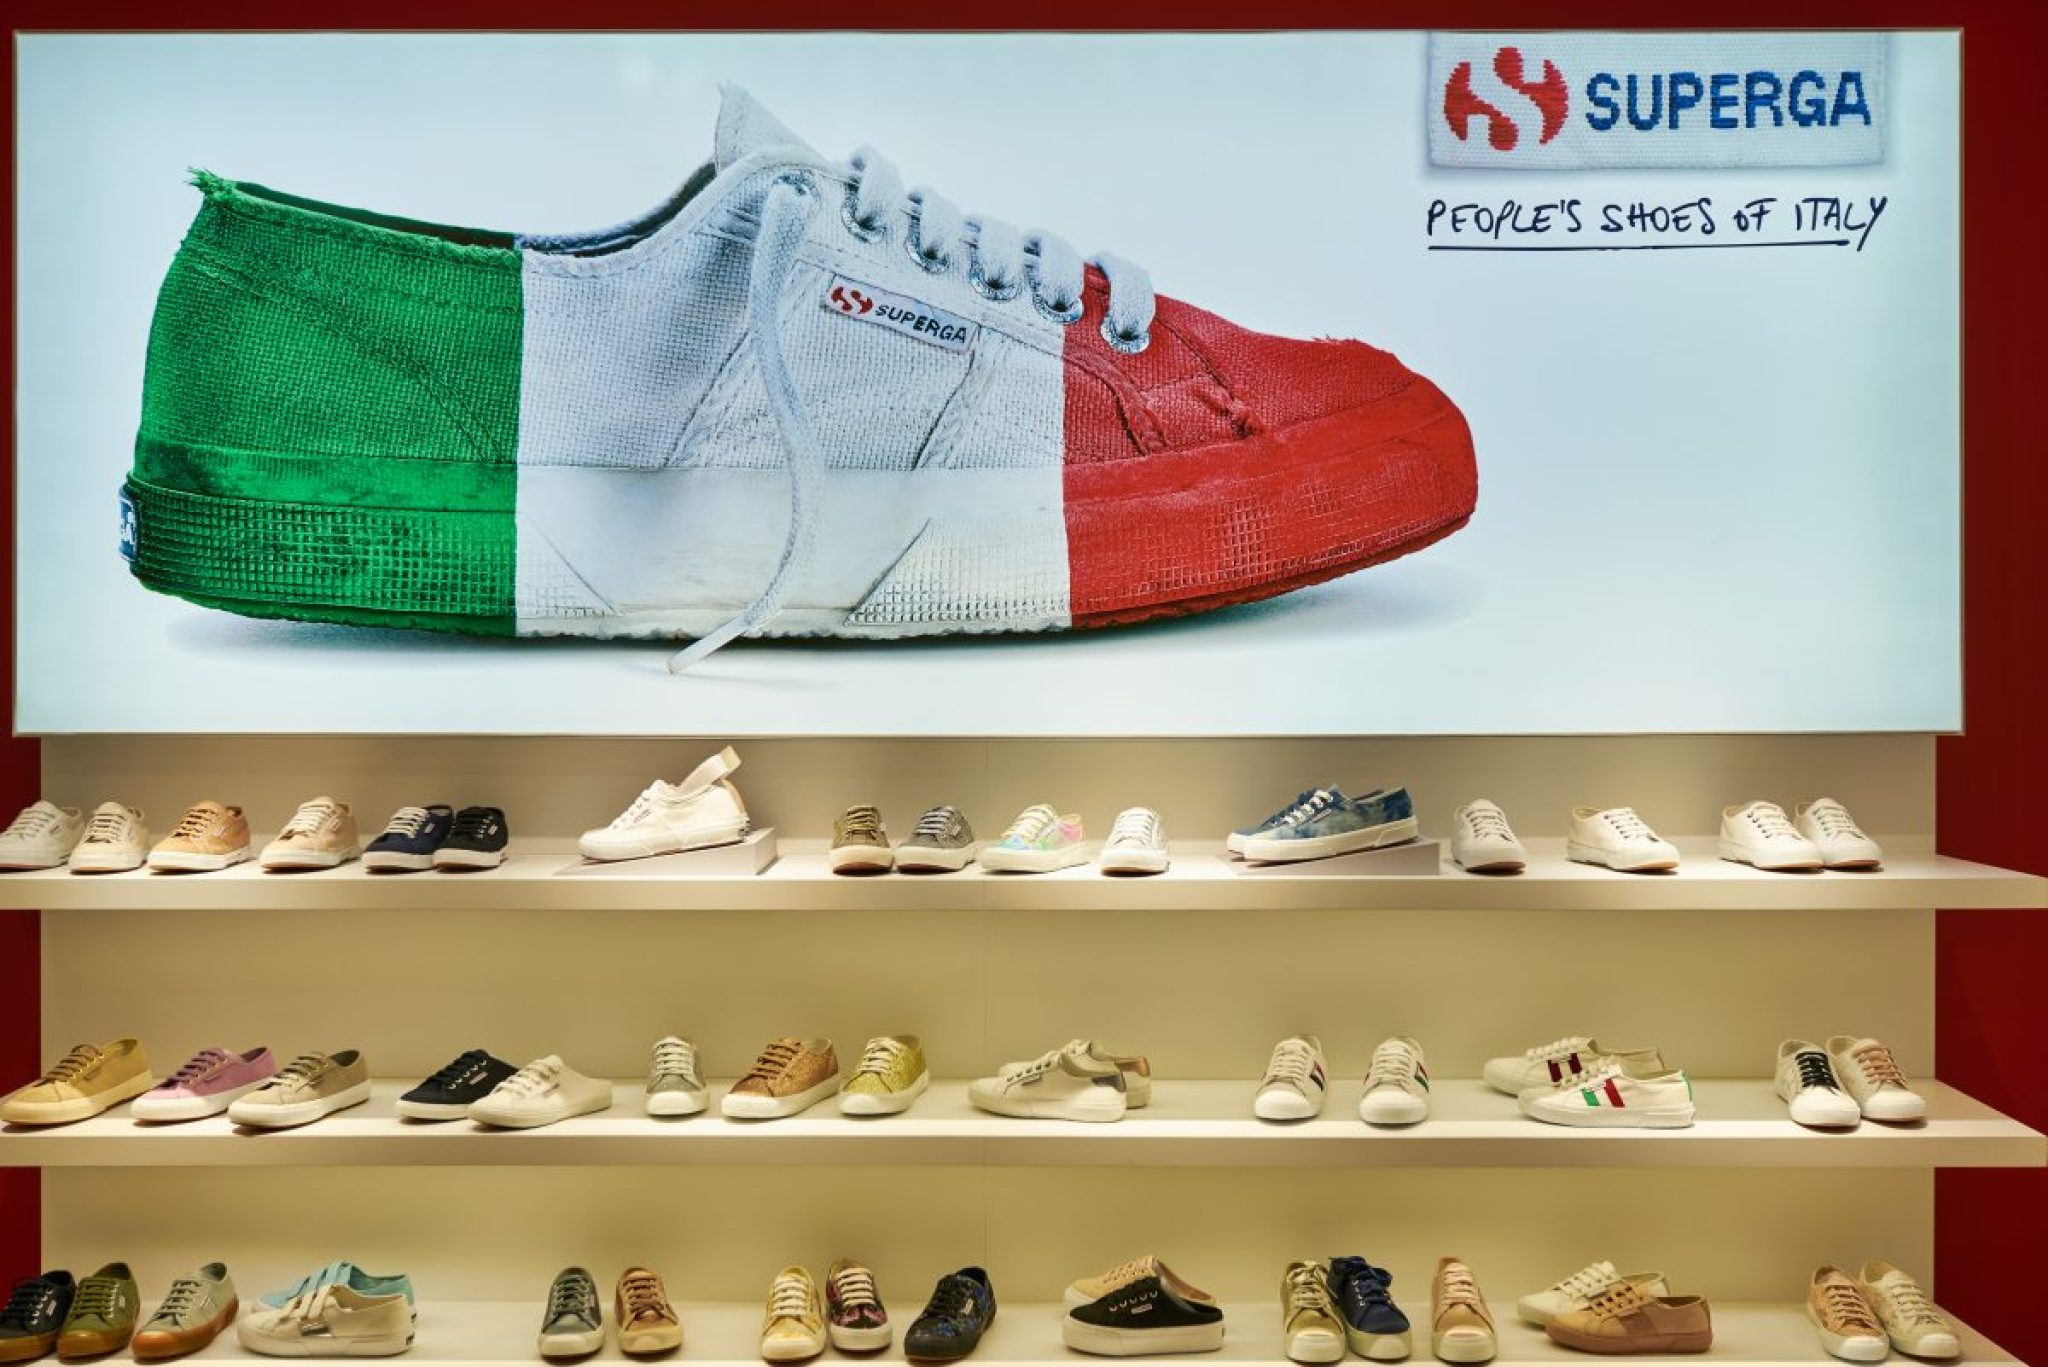 Superga Shoe Size Chart Superga Shoes Run Big or Small? The Shoe Box NYC